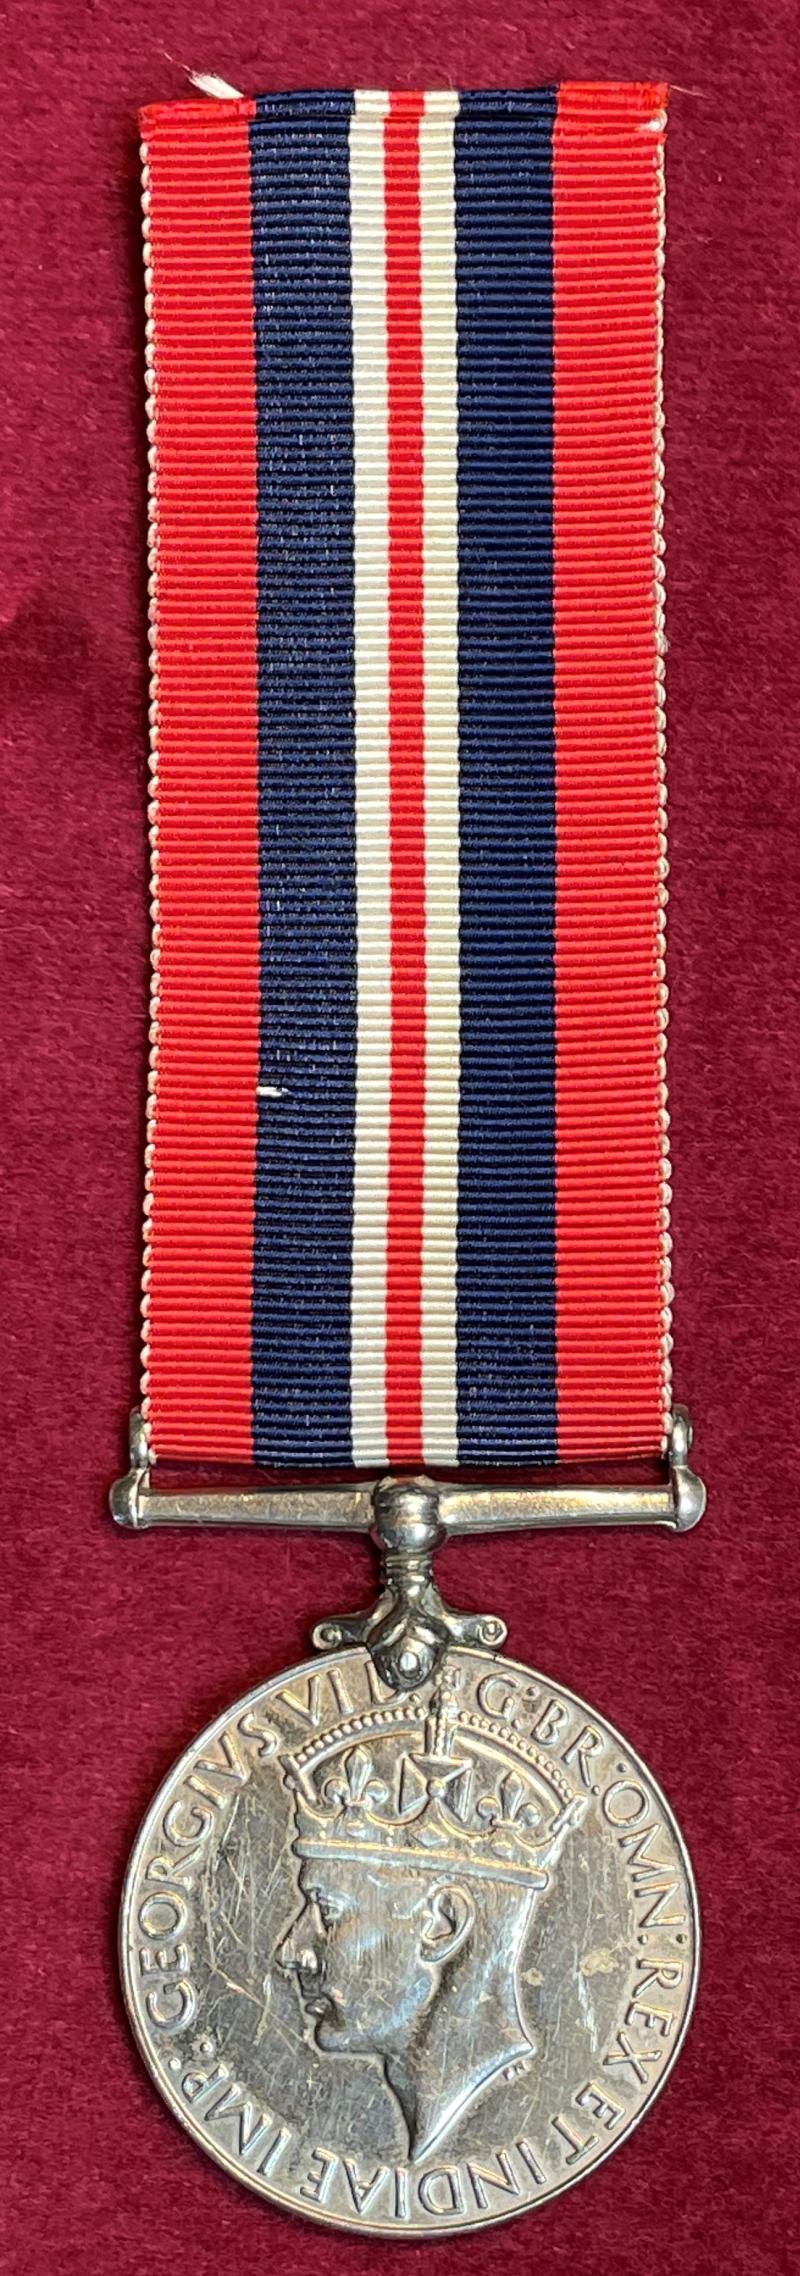 UK British war medal 1939-1945